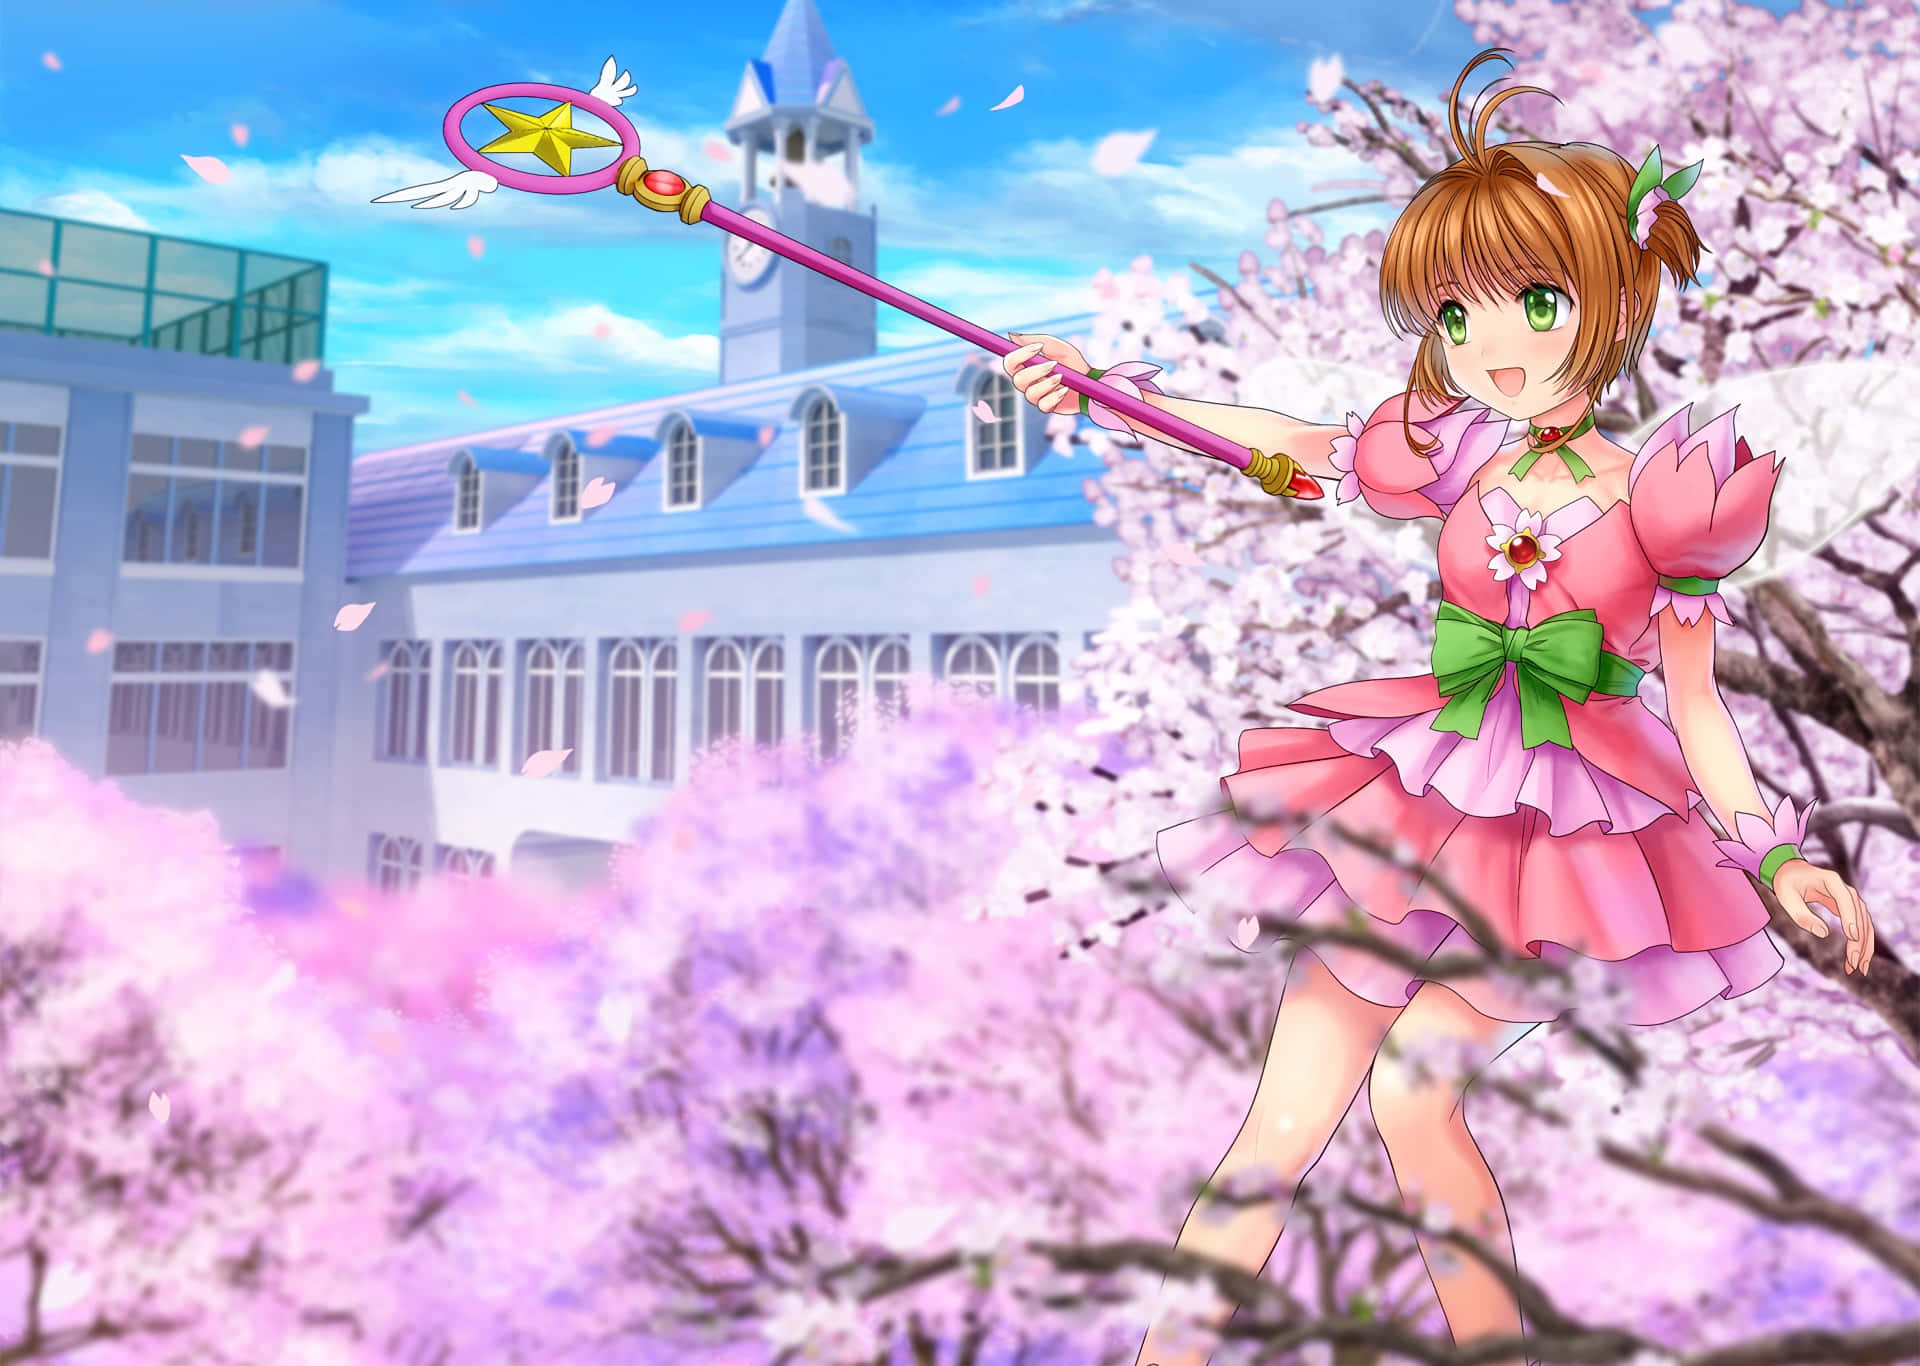 The fantastical world of Cardcaptor Sakura